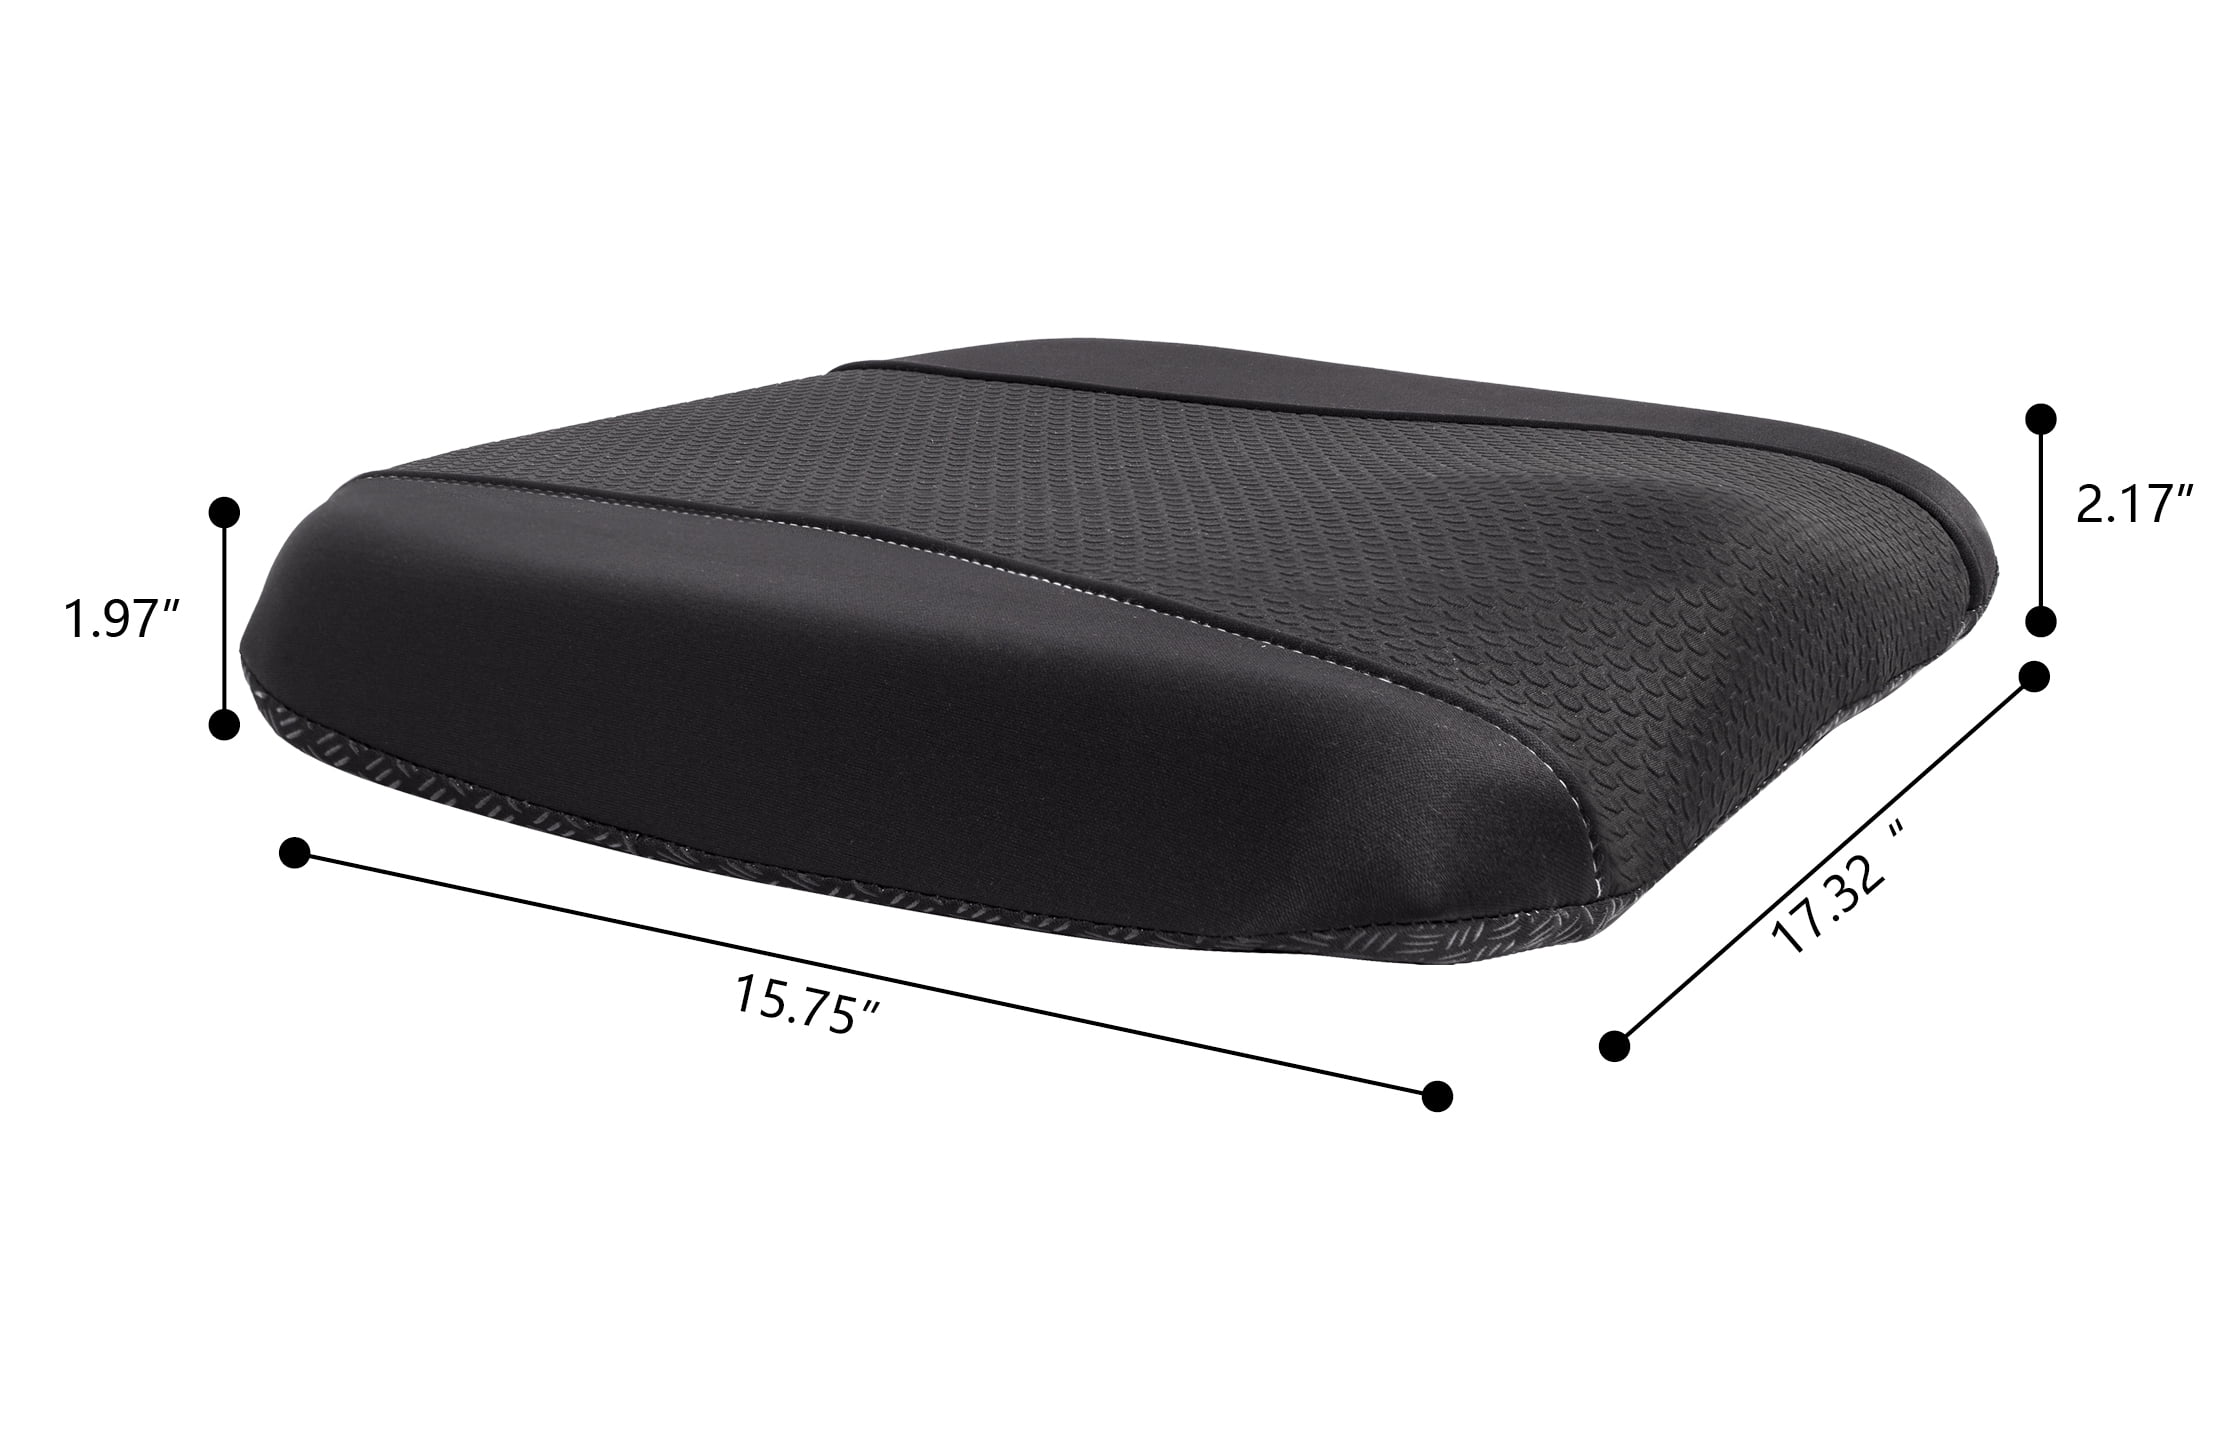 Car Seat Booster Cushions Memory Foam Non-Slip Cushion Pad Inventories  Adjustable Car Seat Cushions Adult